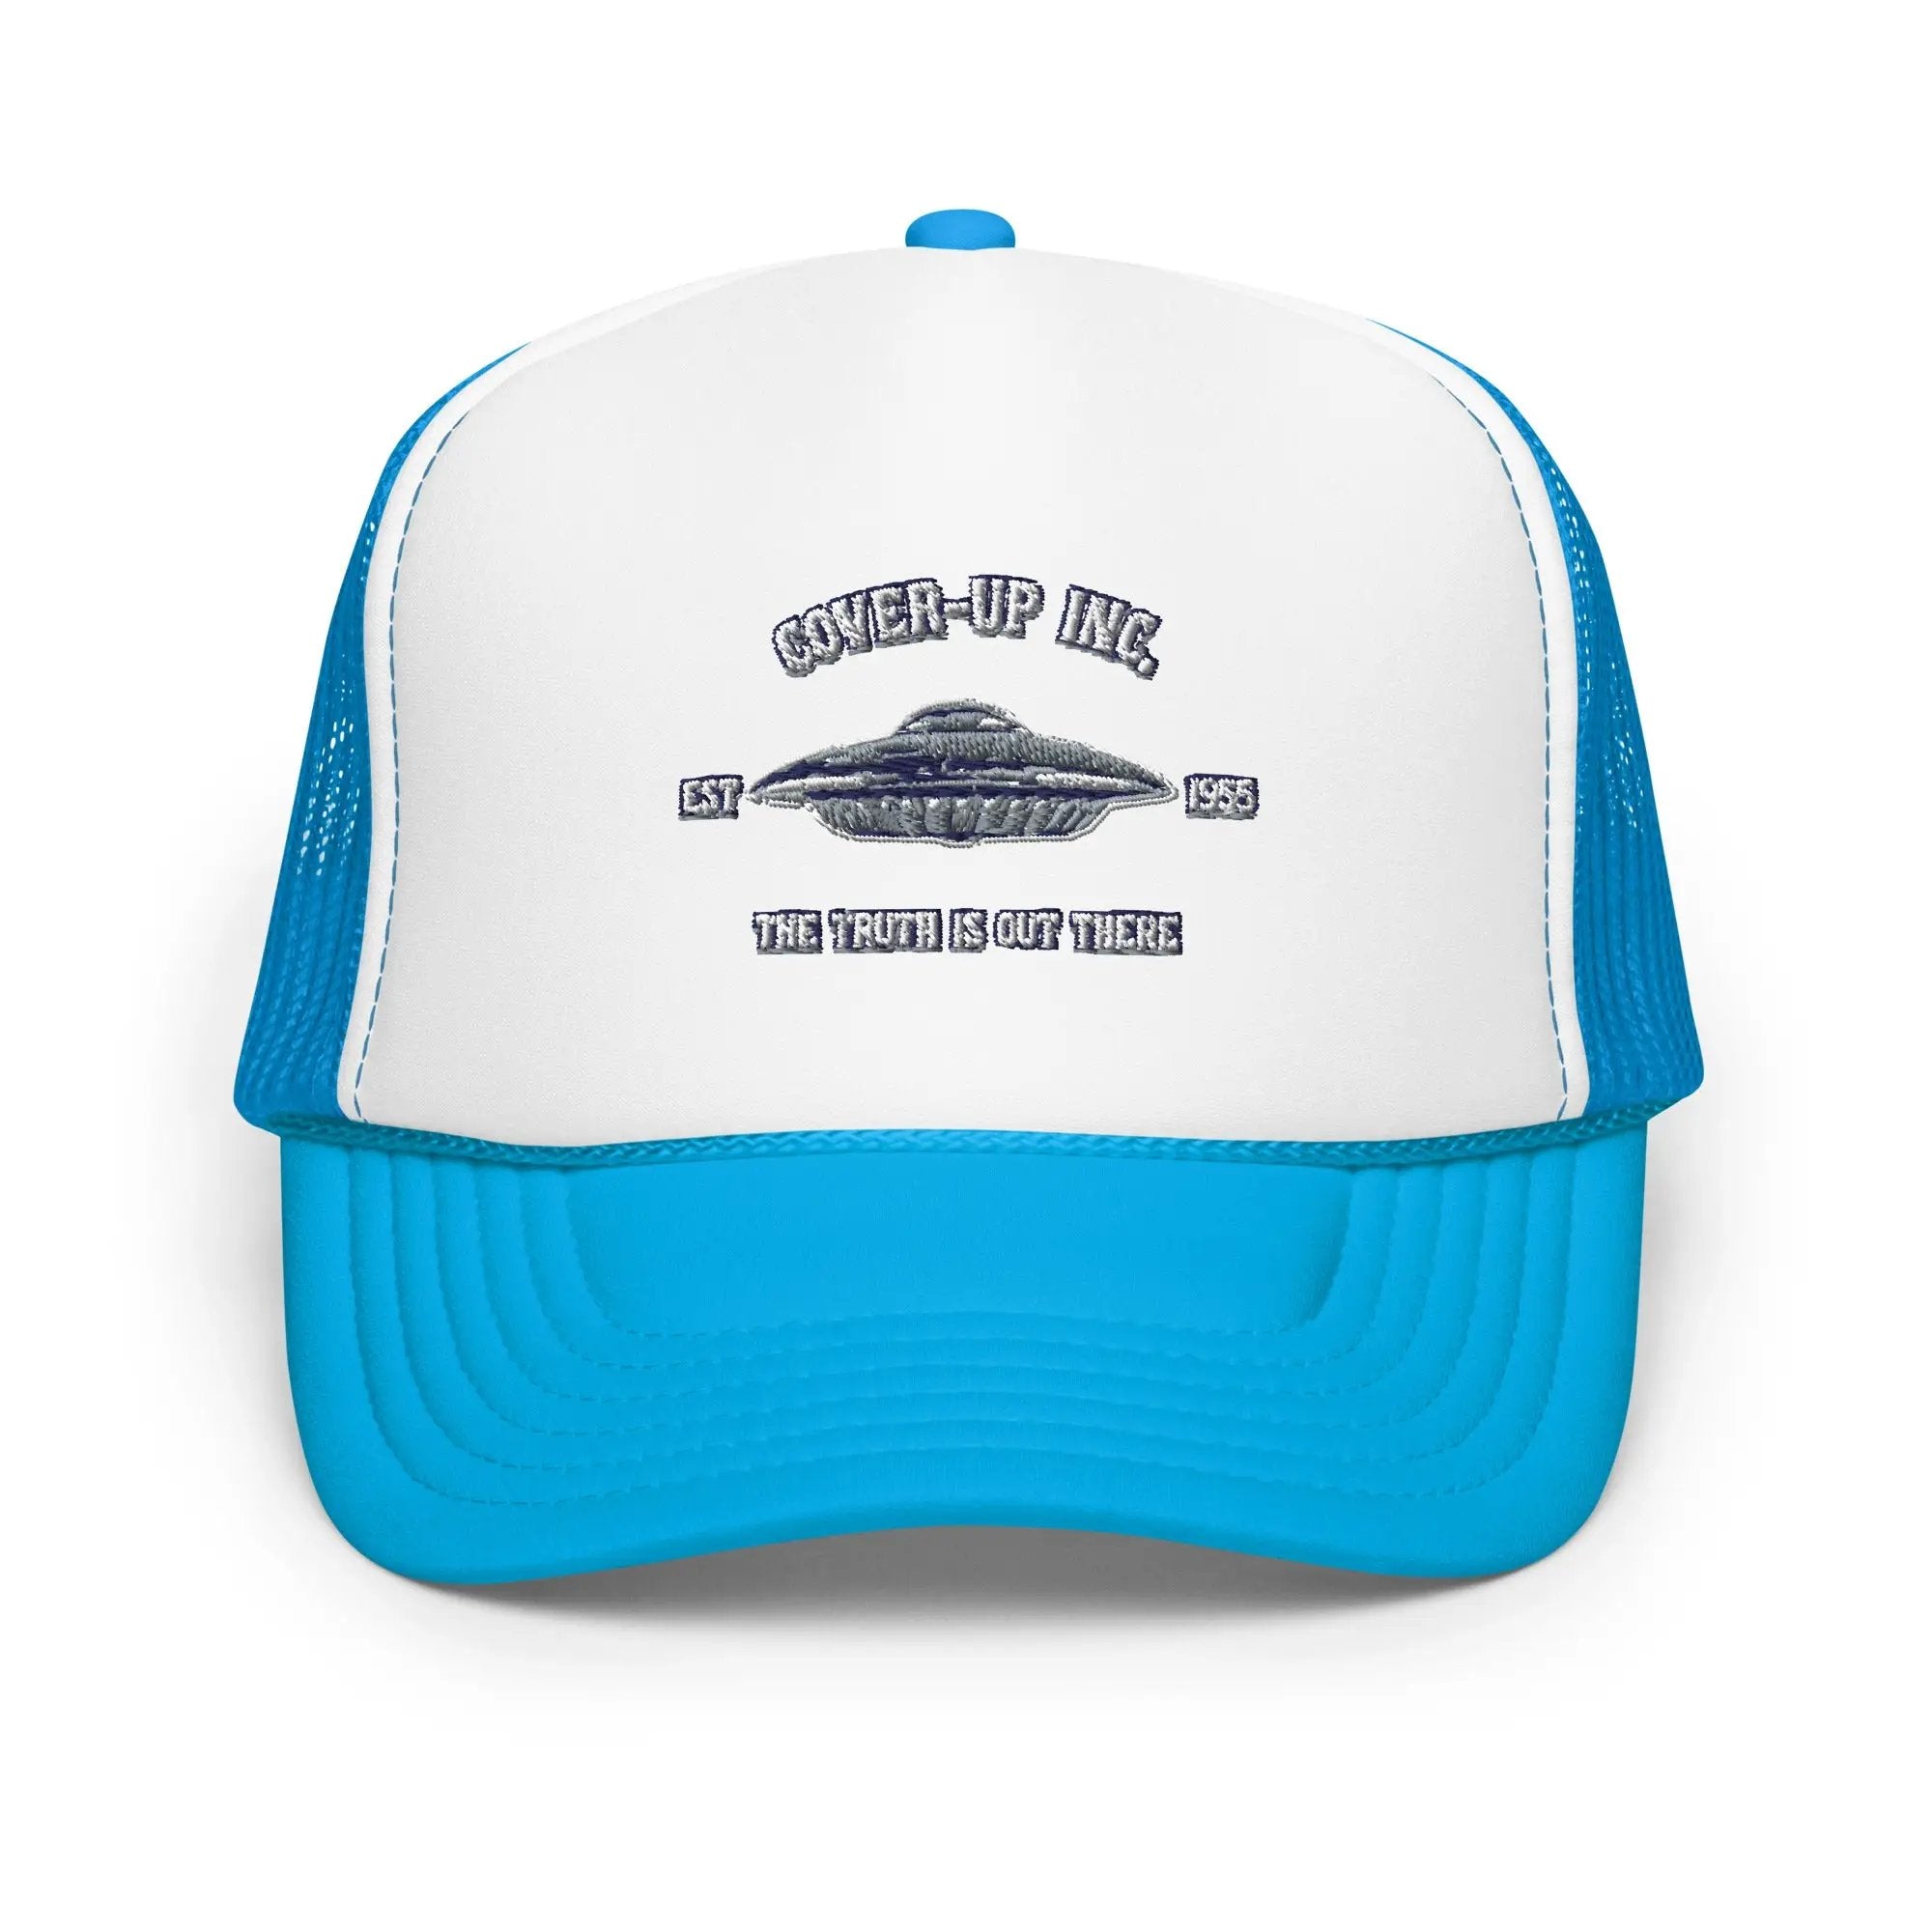 Cover-Up Inc. Foam trucker hat